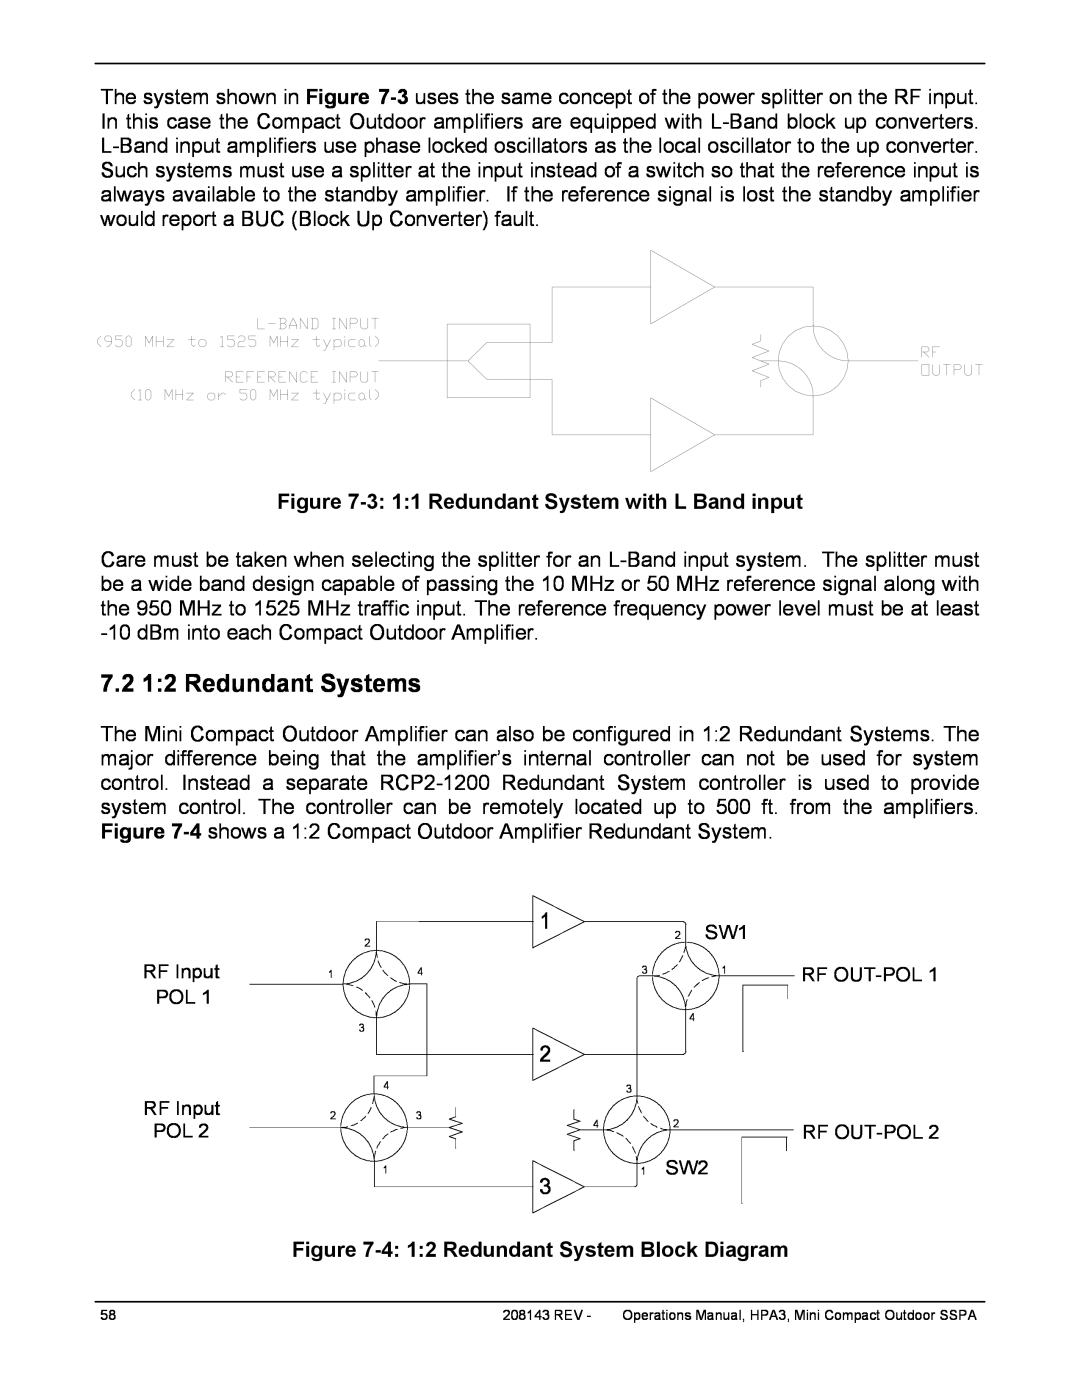 Paradise RA 5785 7.2 1 2 Redundant Systems, 3 1 1 Redundant System with L Band input, 4 1 2 Redundant System Block Diagram 